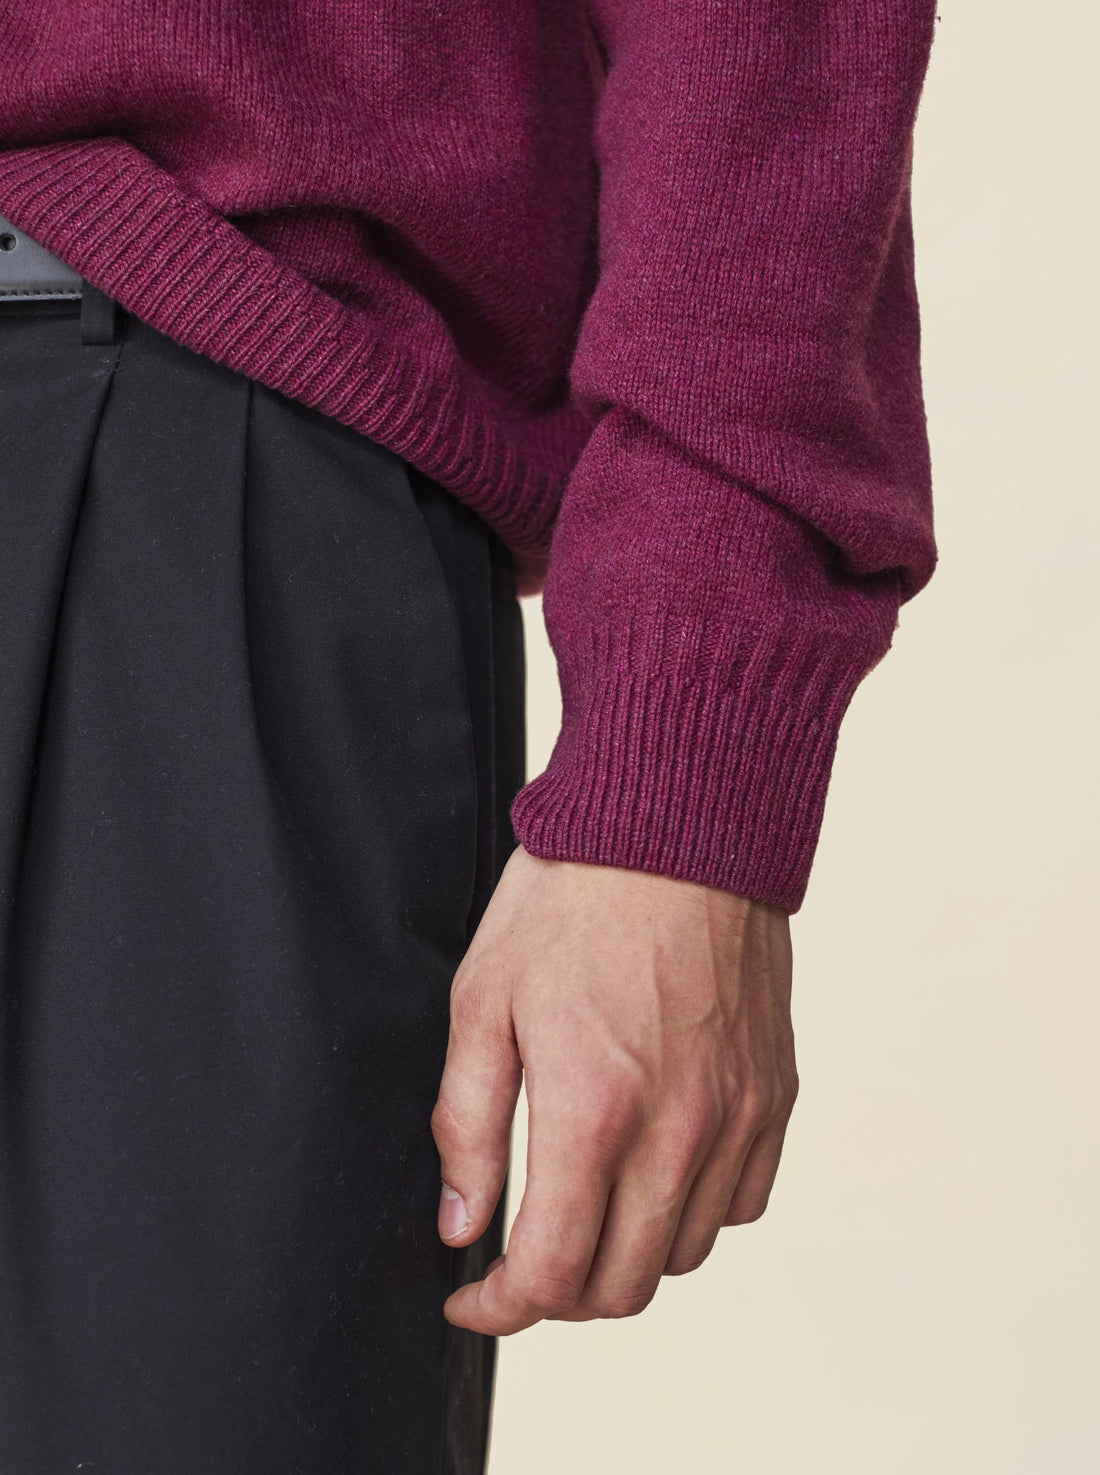 Men's cashmere crewneck sweater in burgundy